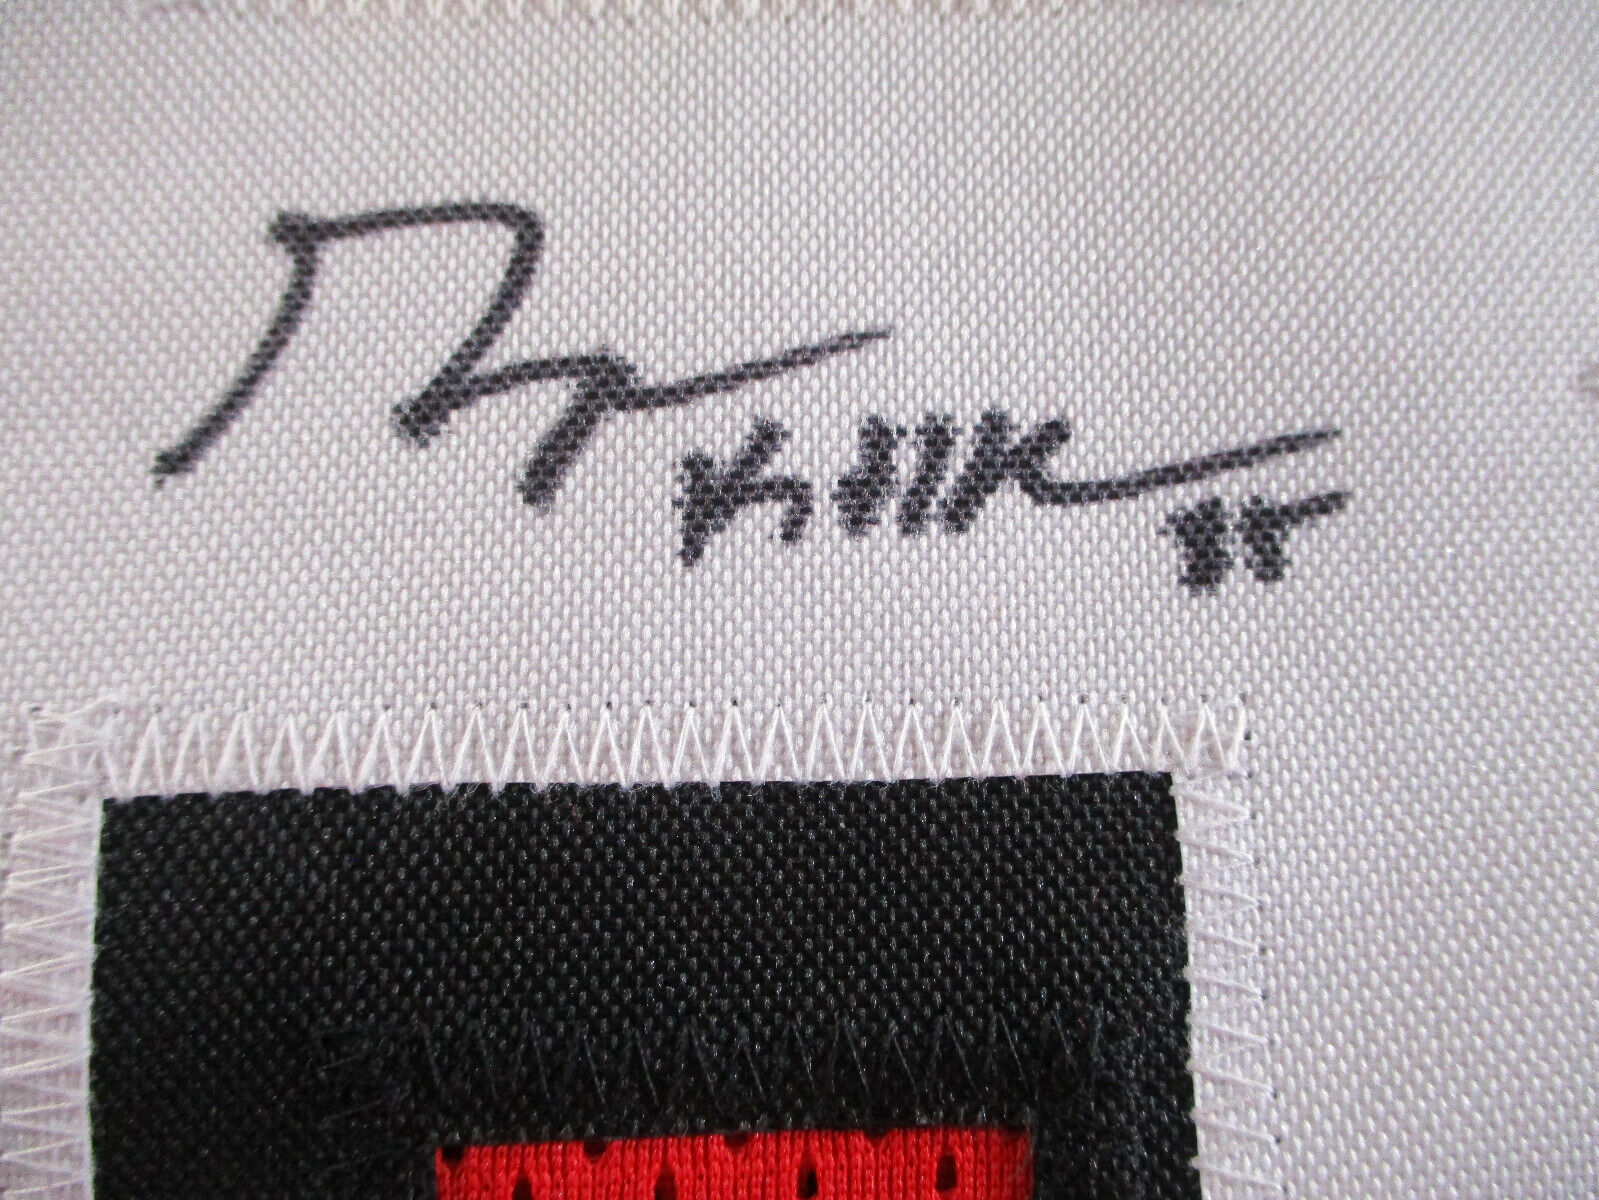 George Kittle / Autographed San Francisco 49Ers Custom Football Jersey / C.O.A.